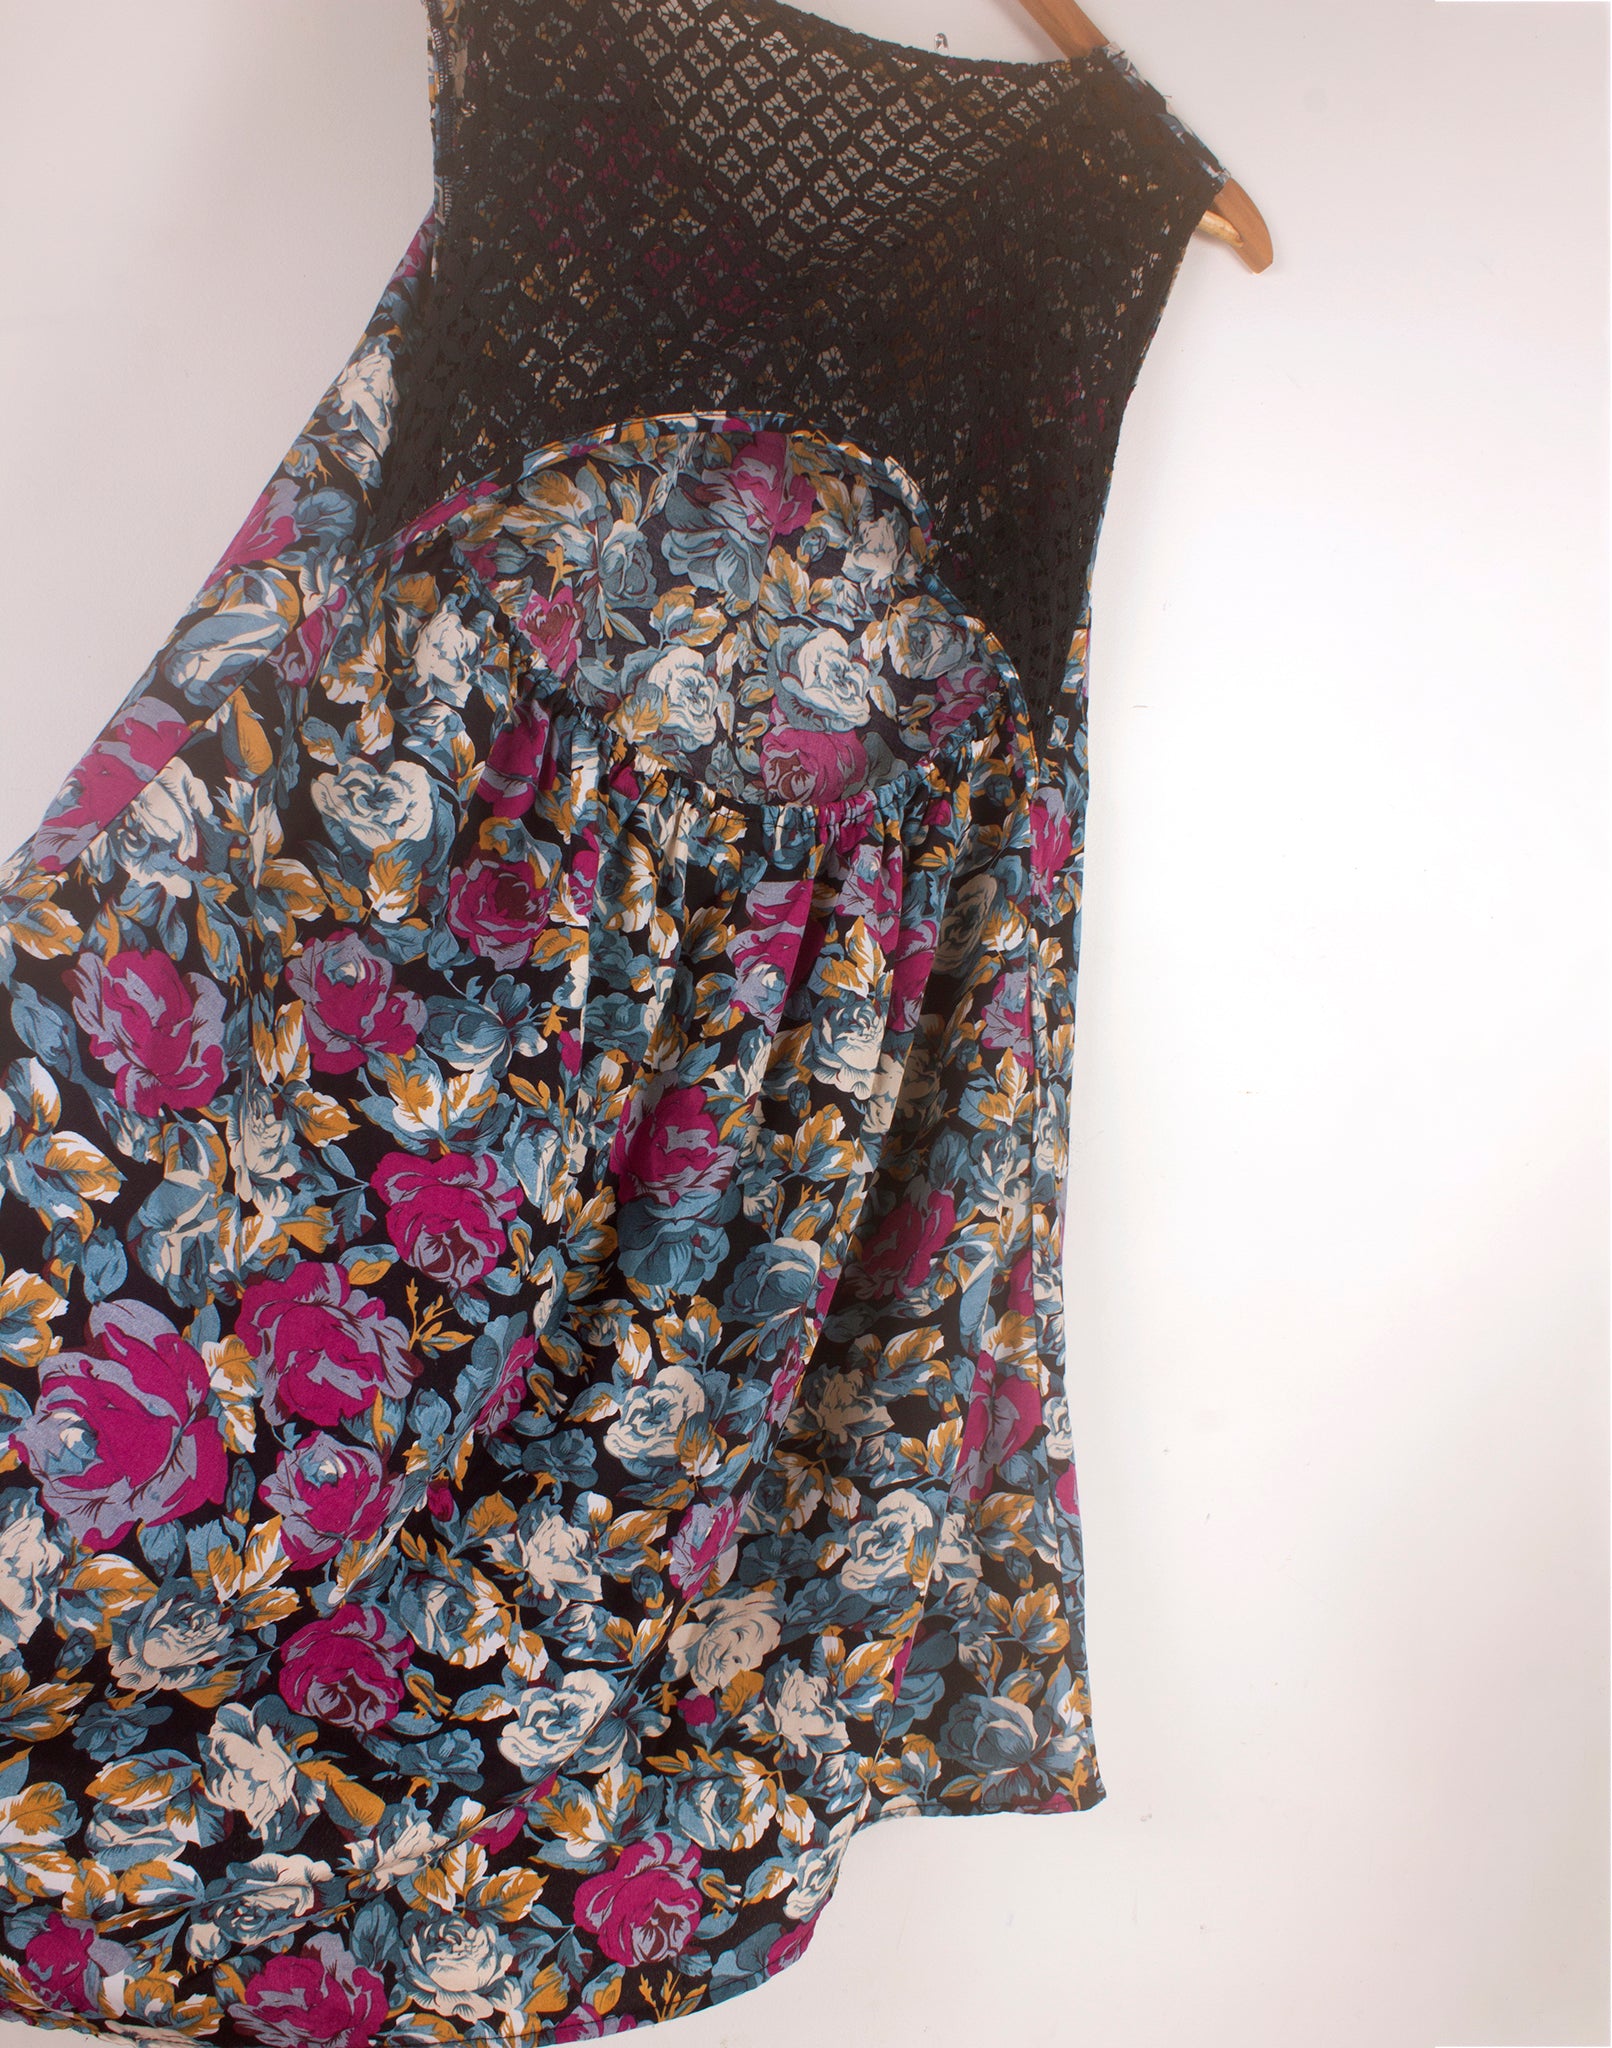 Black Floral Lace Back Tunic Dress - Size M / L